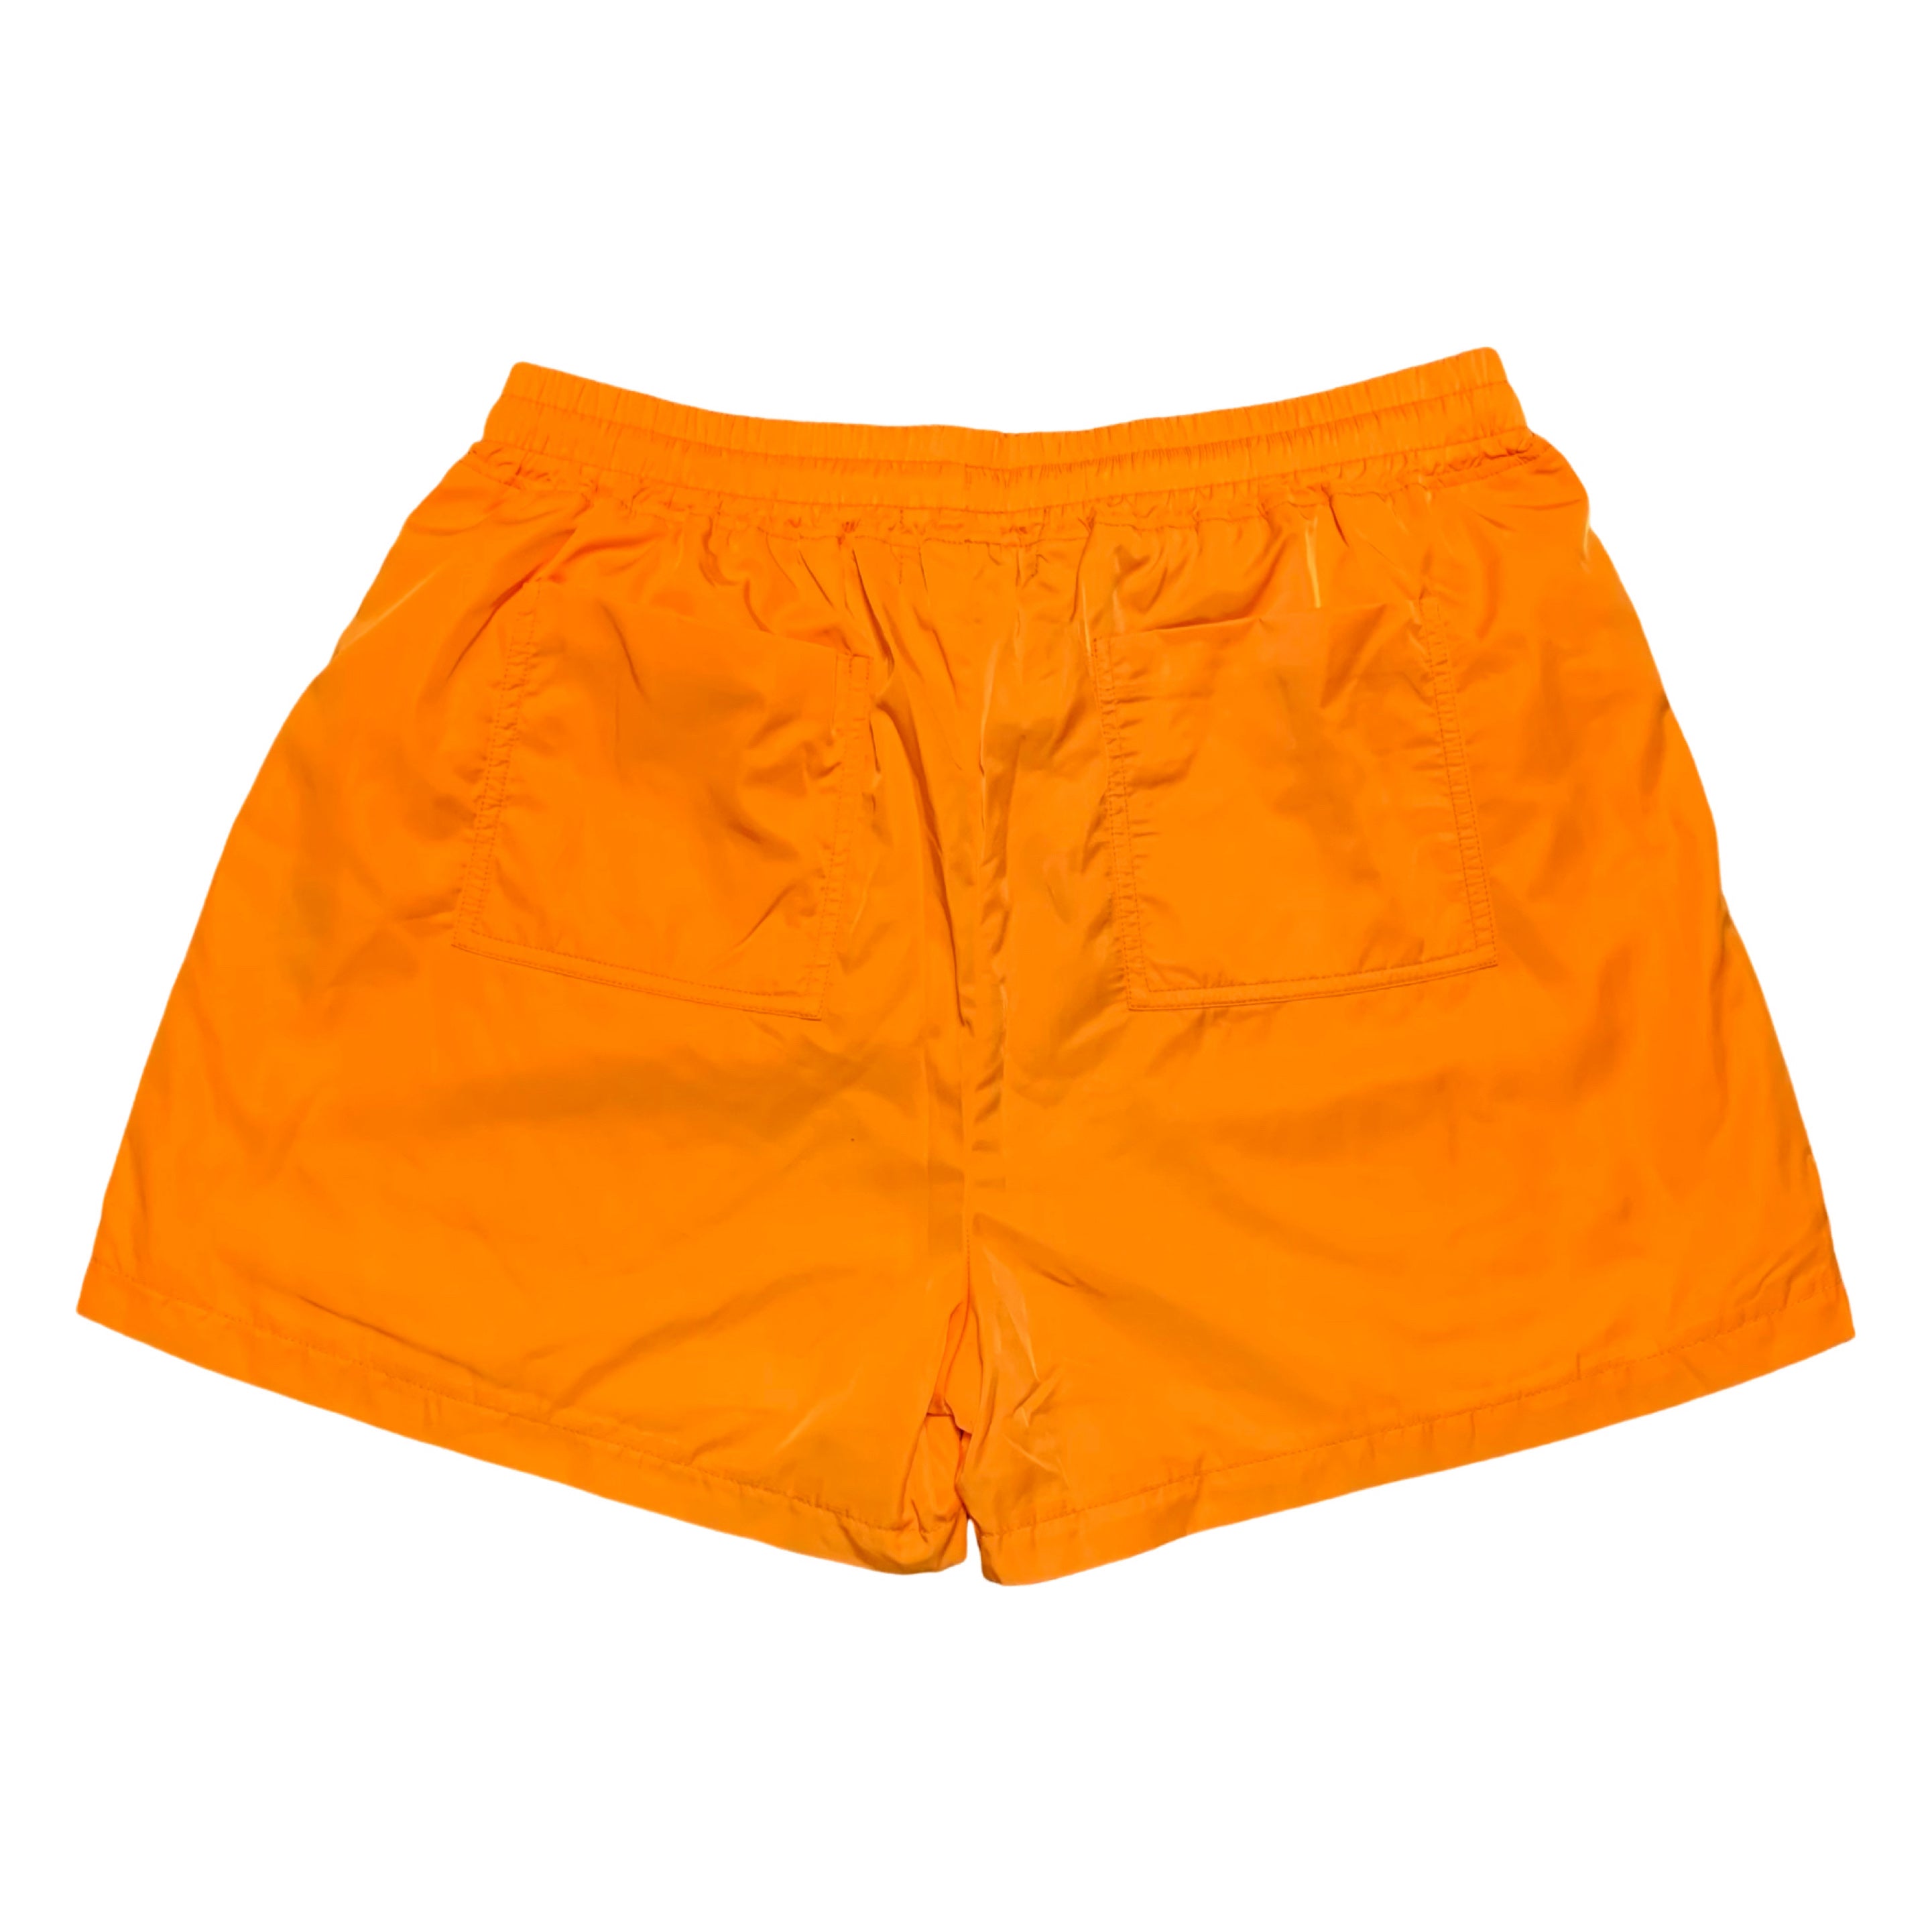 Represent Large Shorts Orange Storm In Heaven